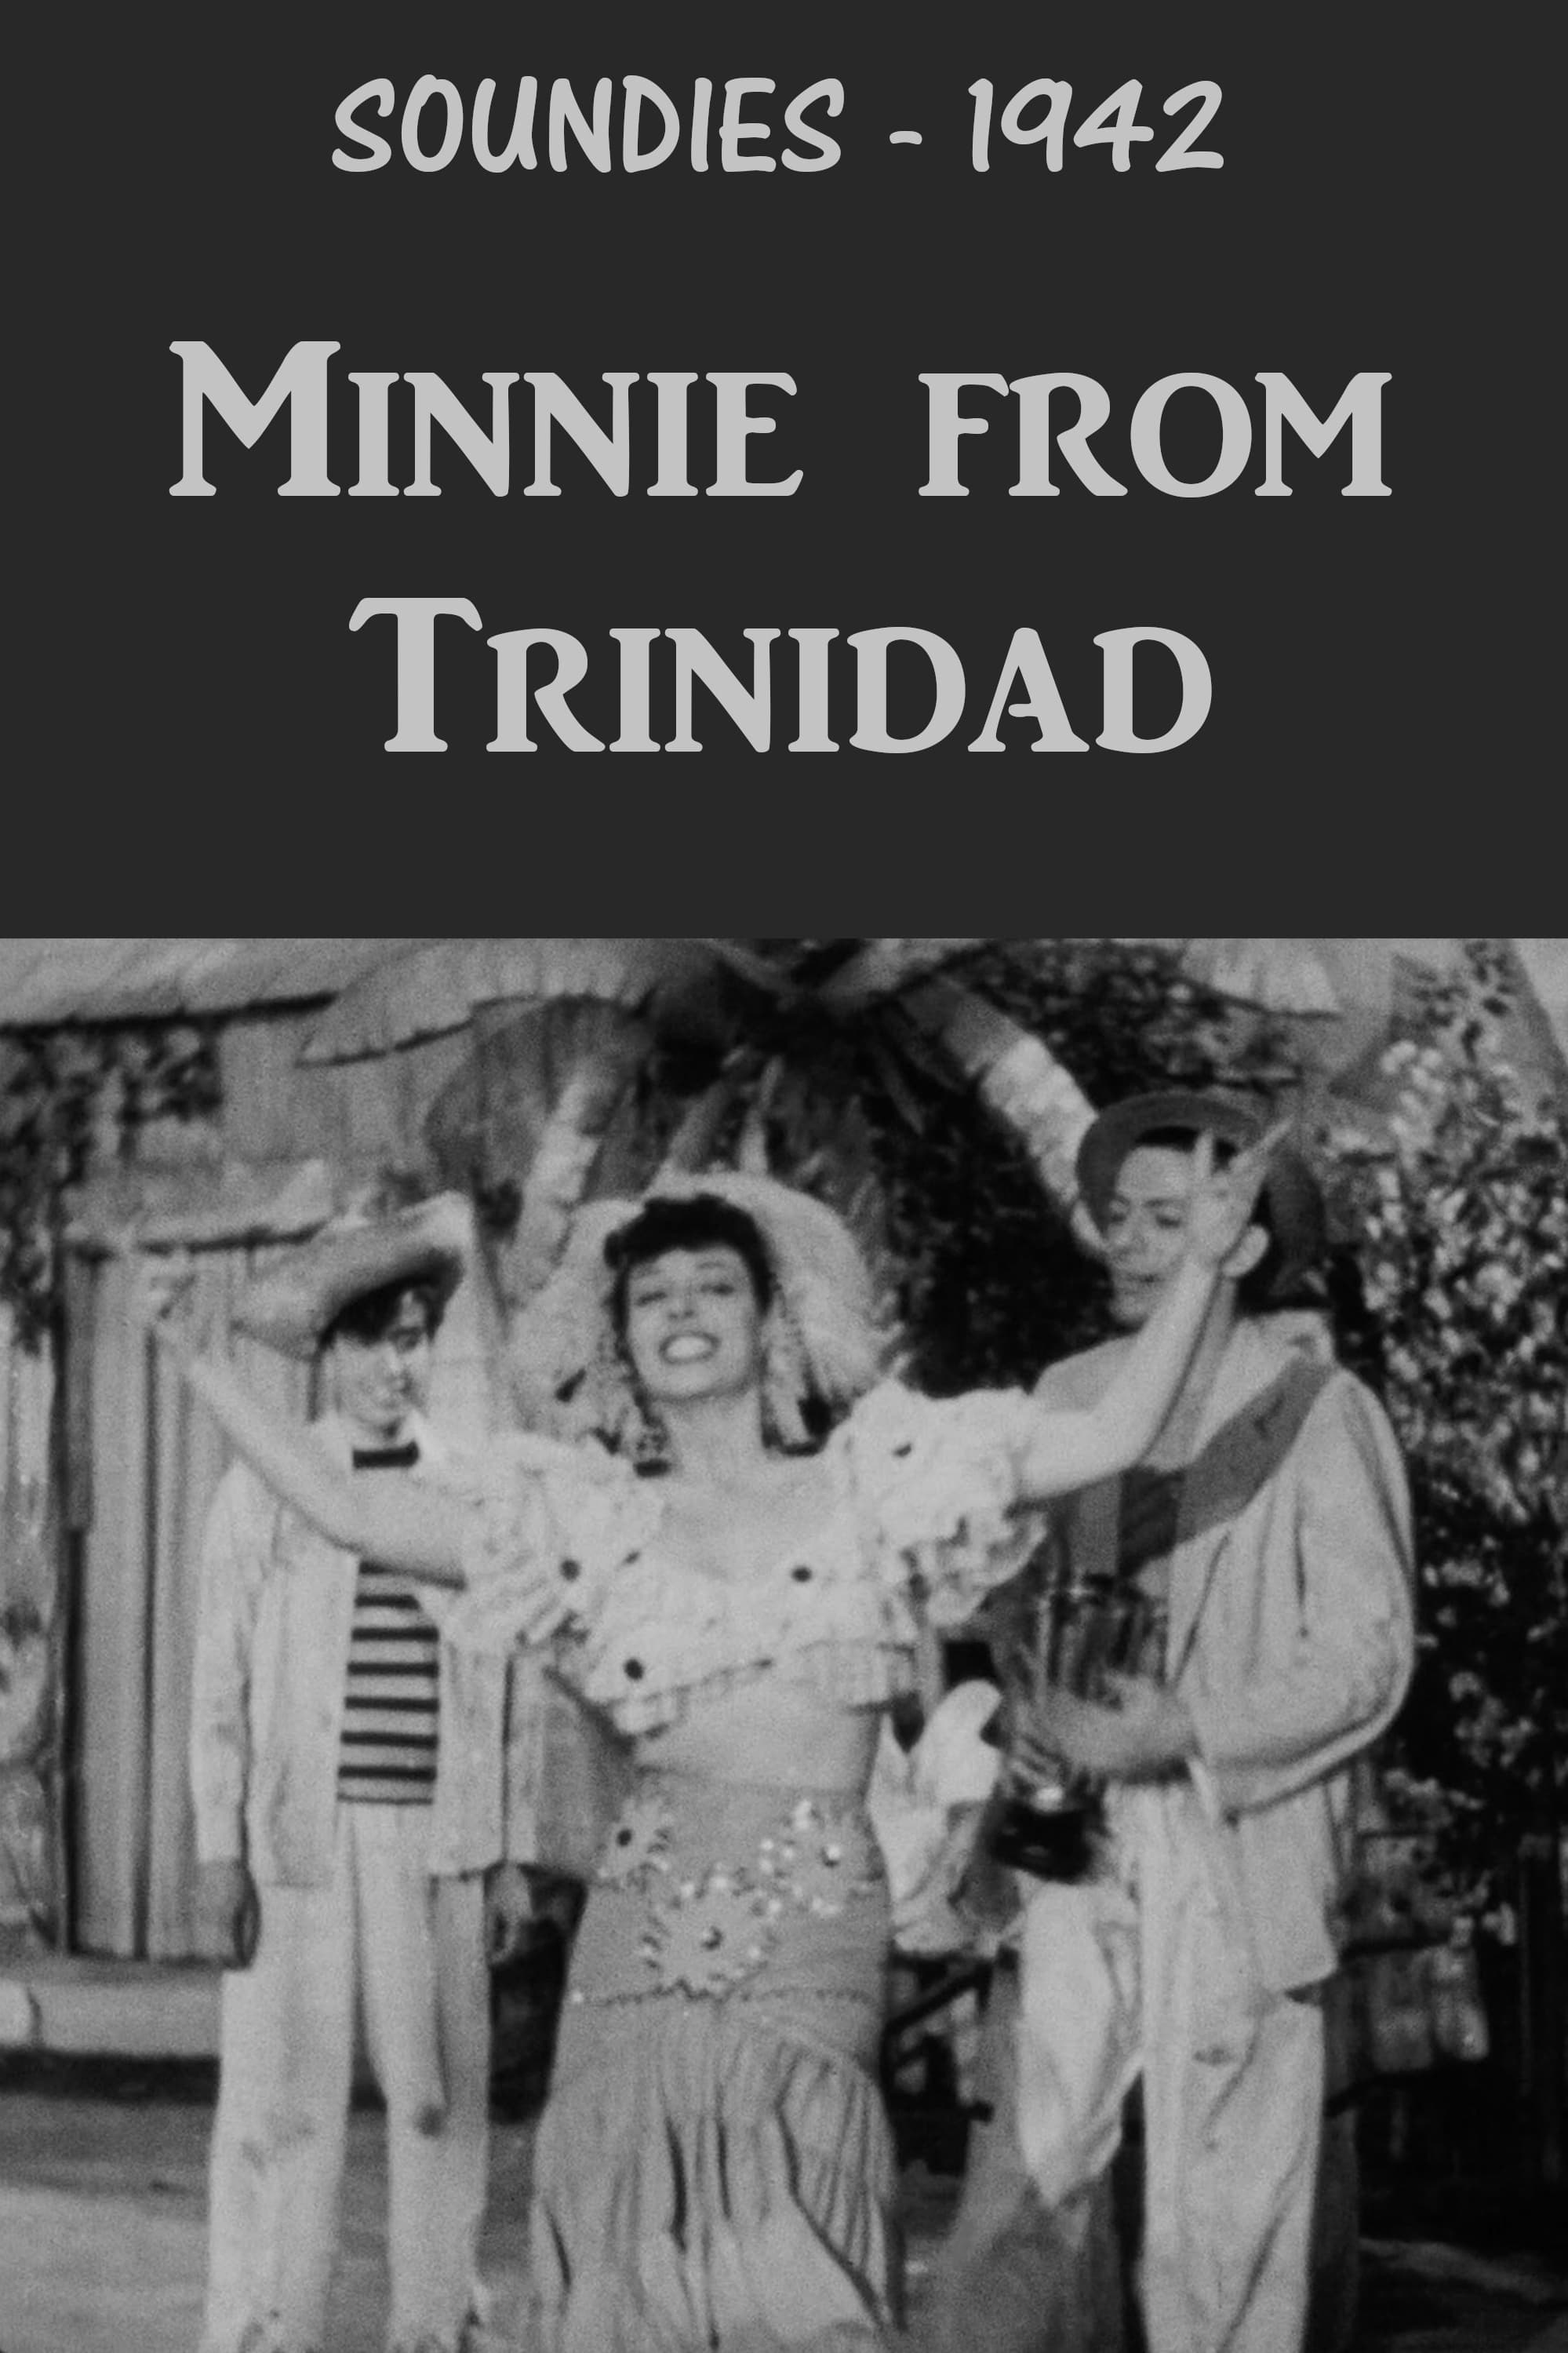 Minnie from Trinidad